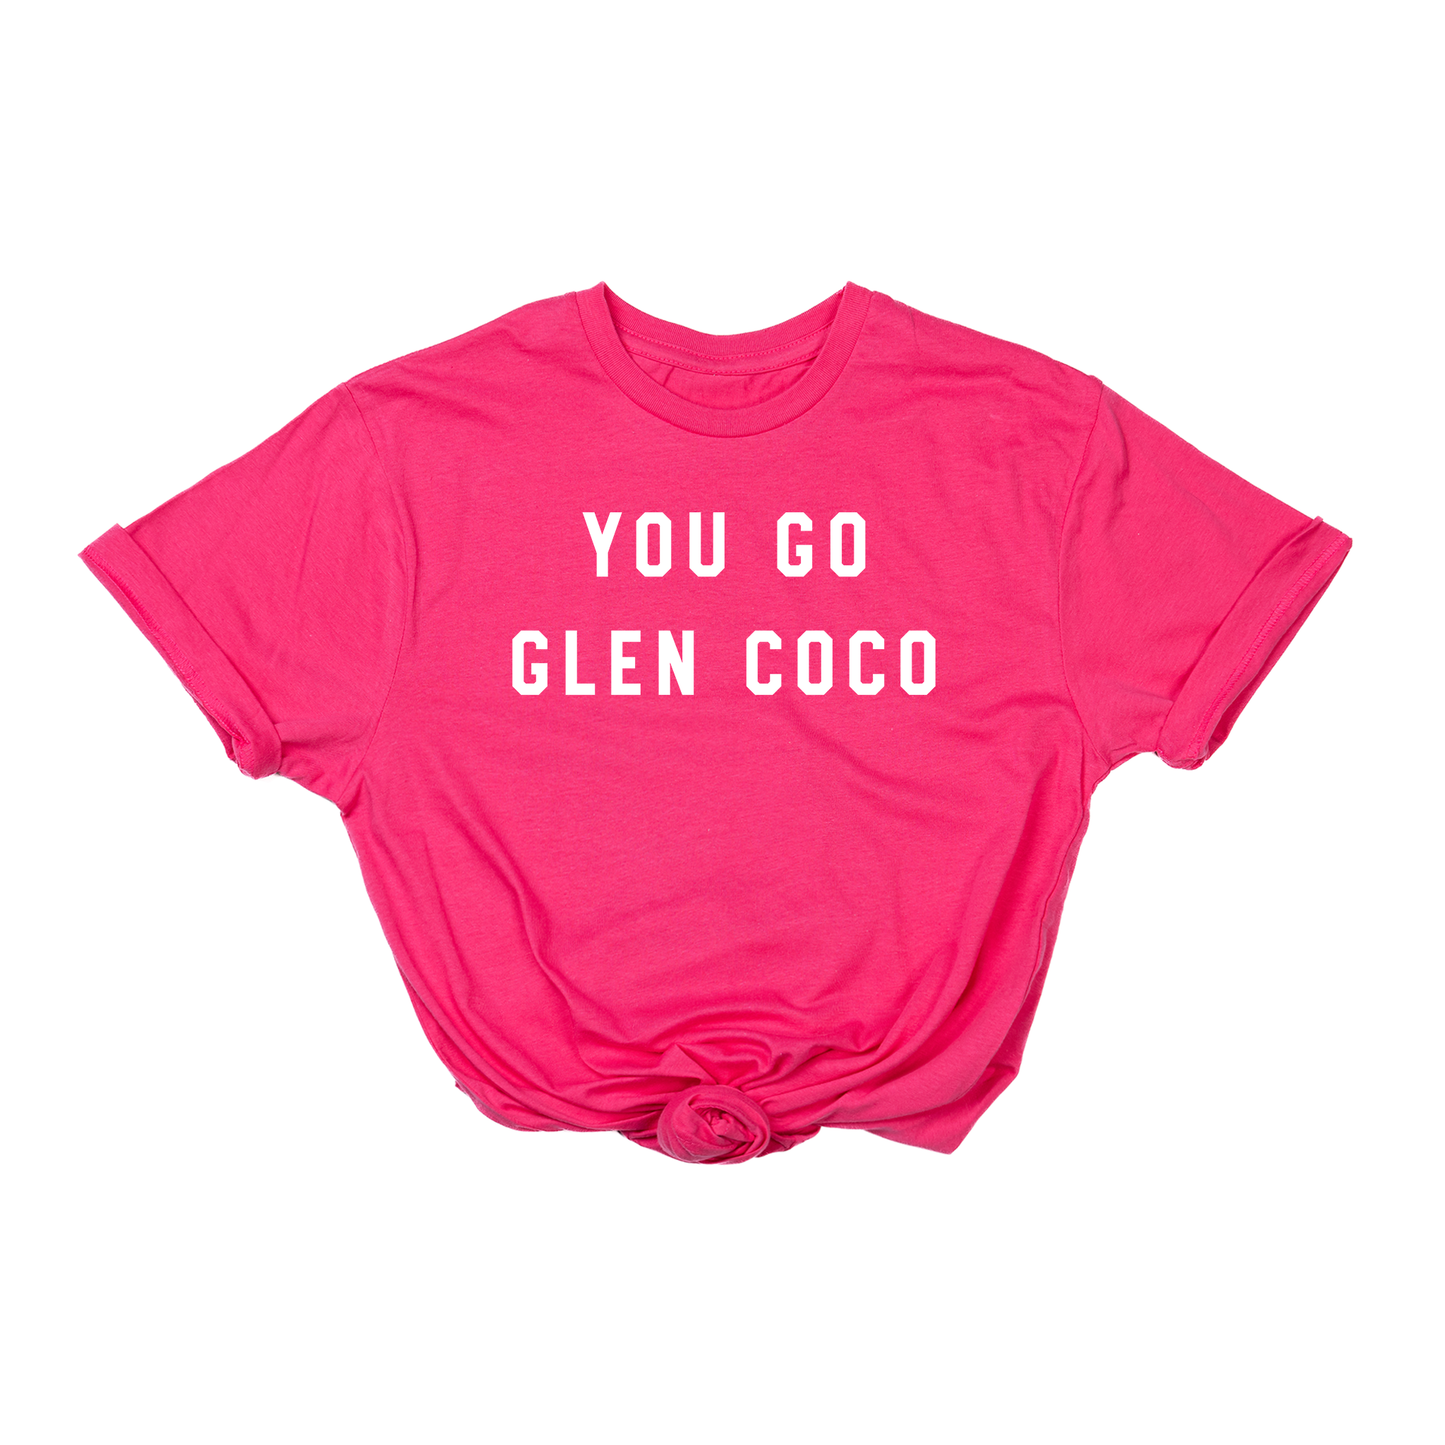 You Go Glen Coco (White) - Tee (Hot Pink)